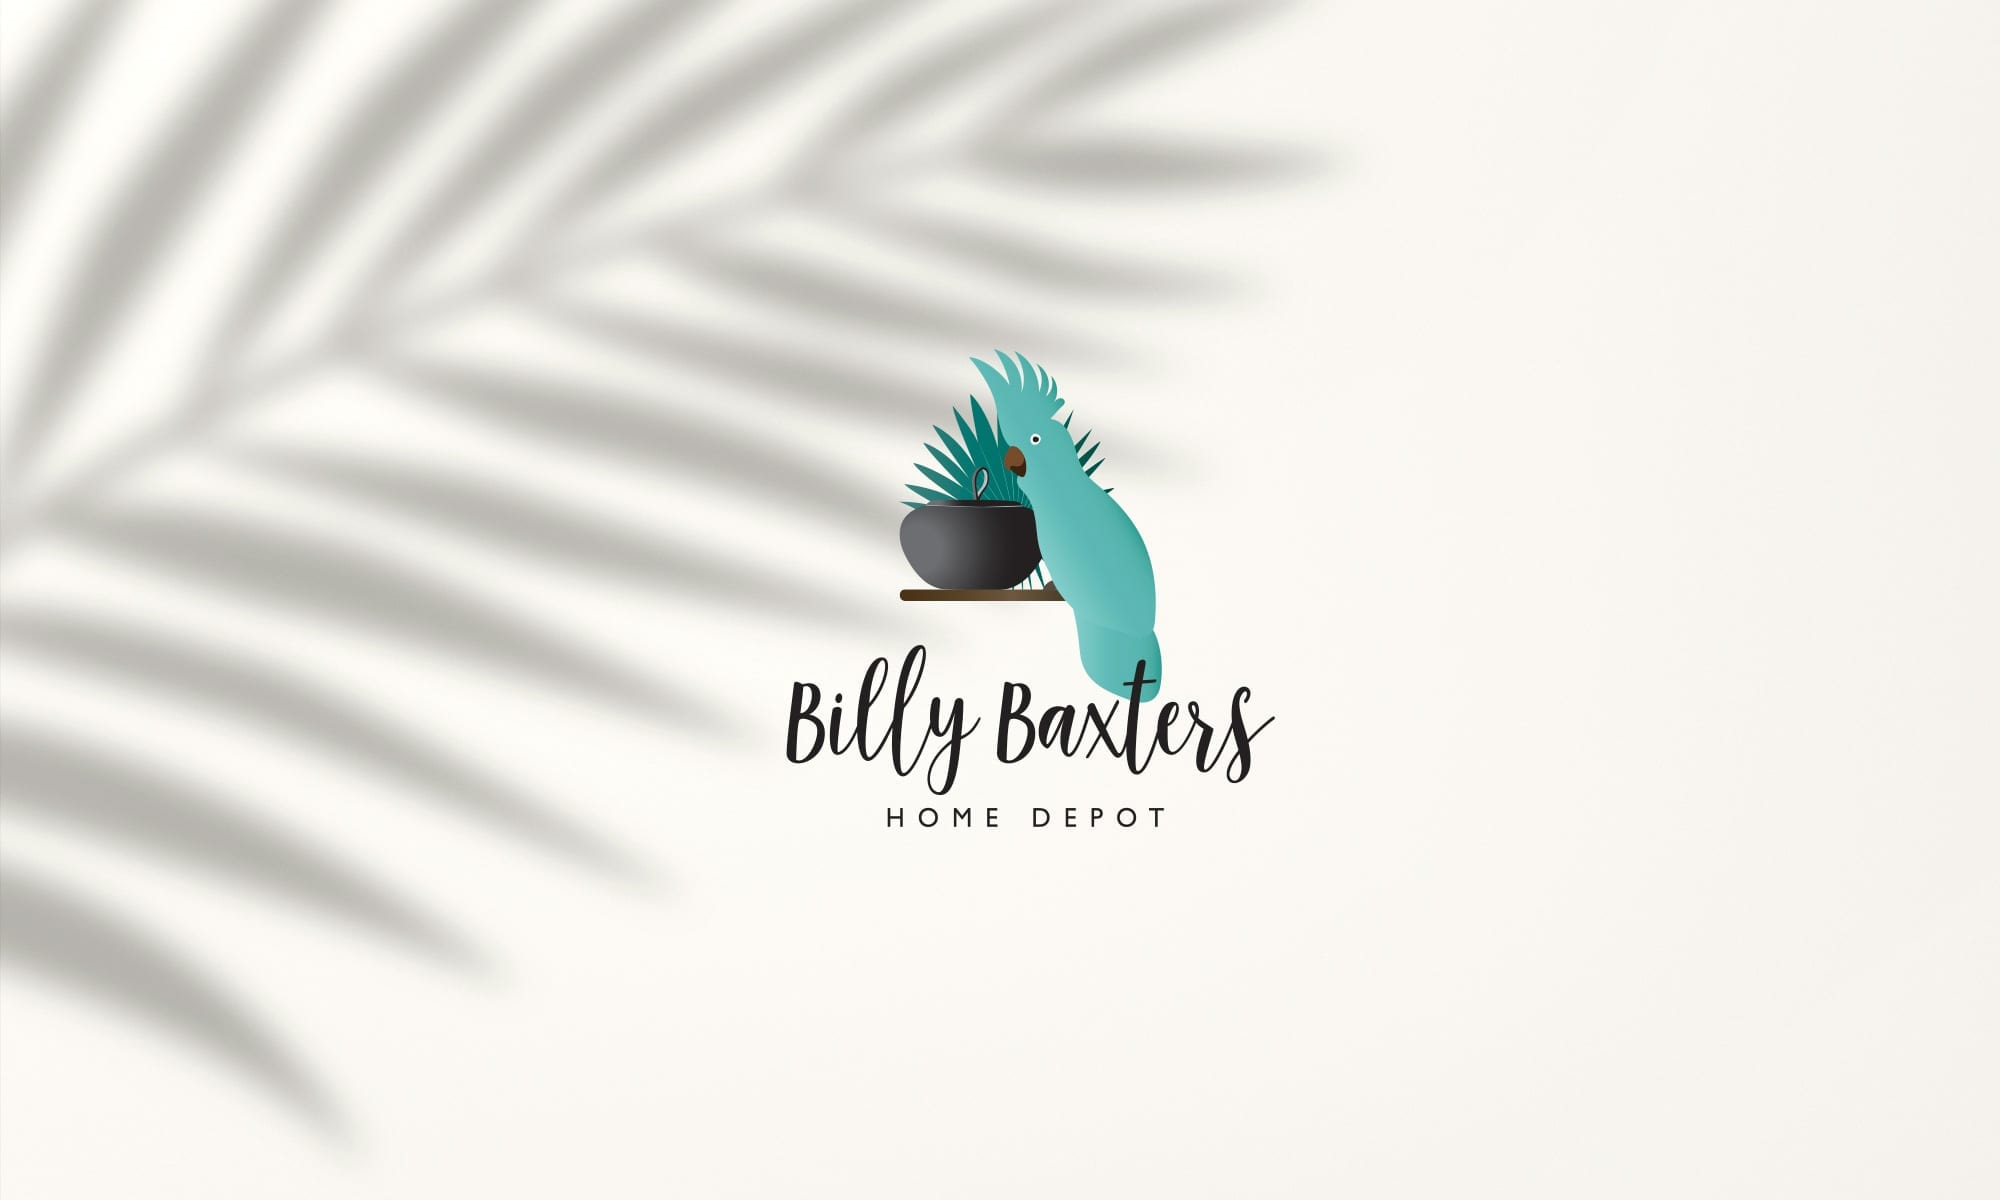 Logo Design Billy Baxters